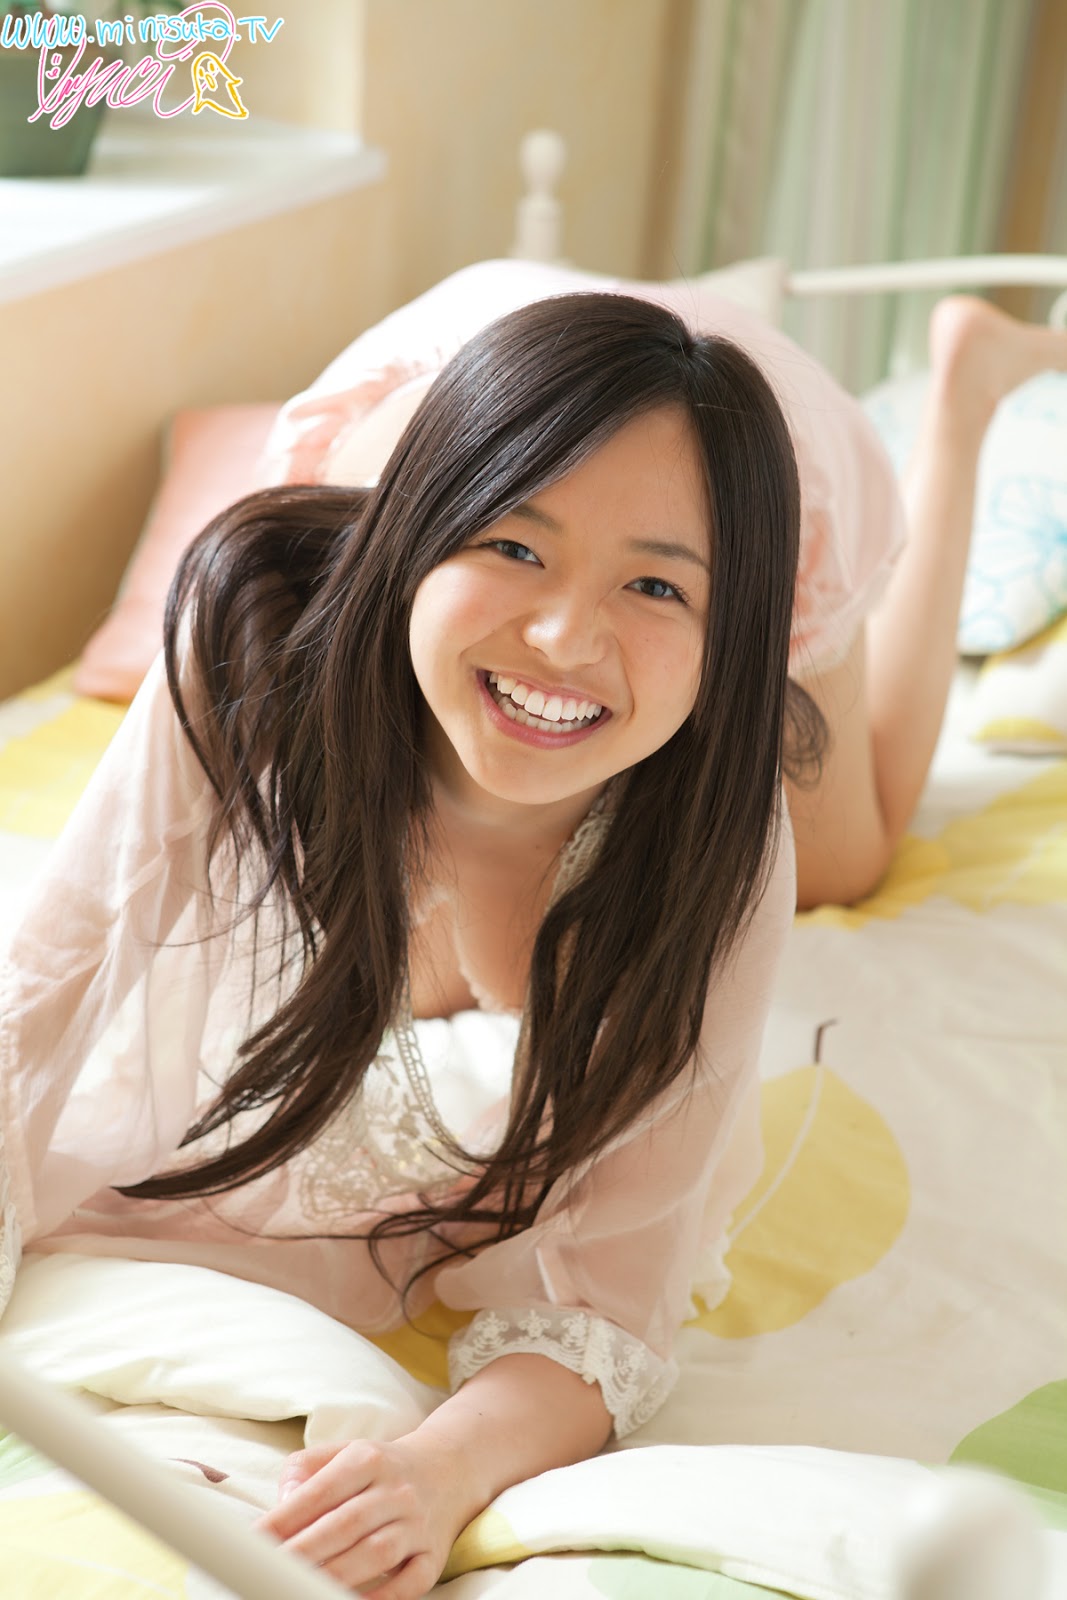 Mayumi Yamanaka Japanese Cute Idol Sexy White Night Dress Fashion Photoshoot In Bed Room Part 1